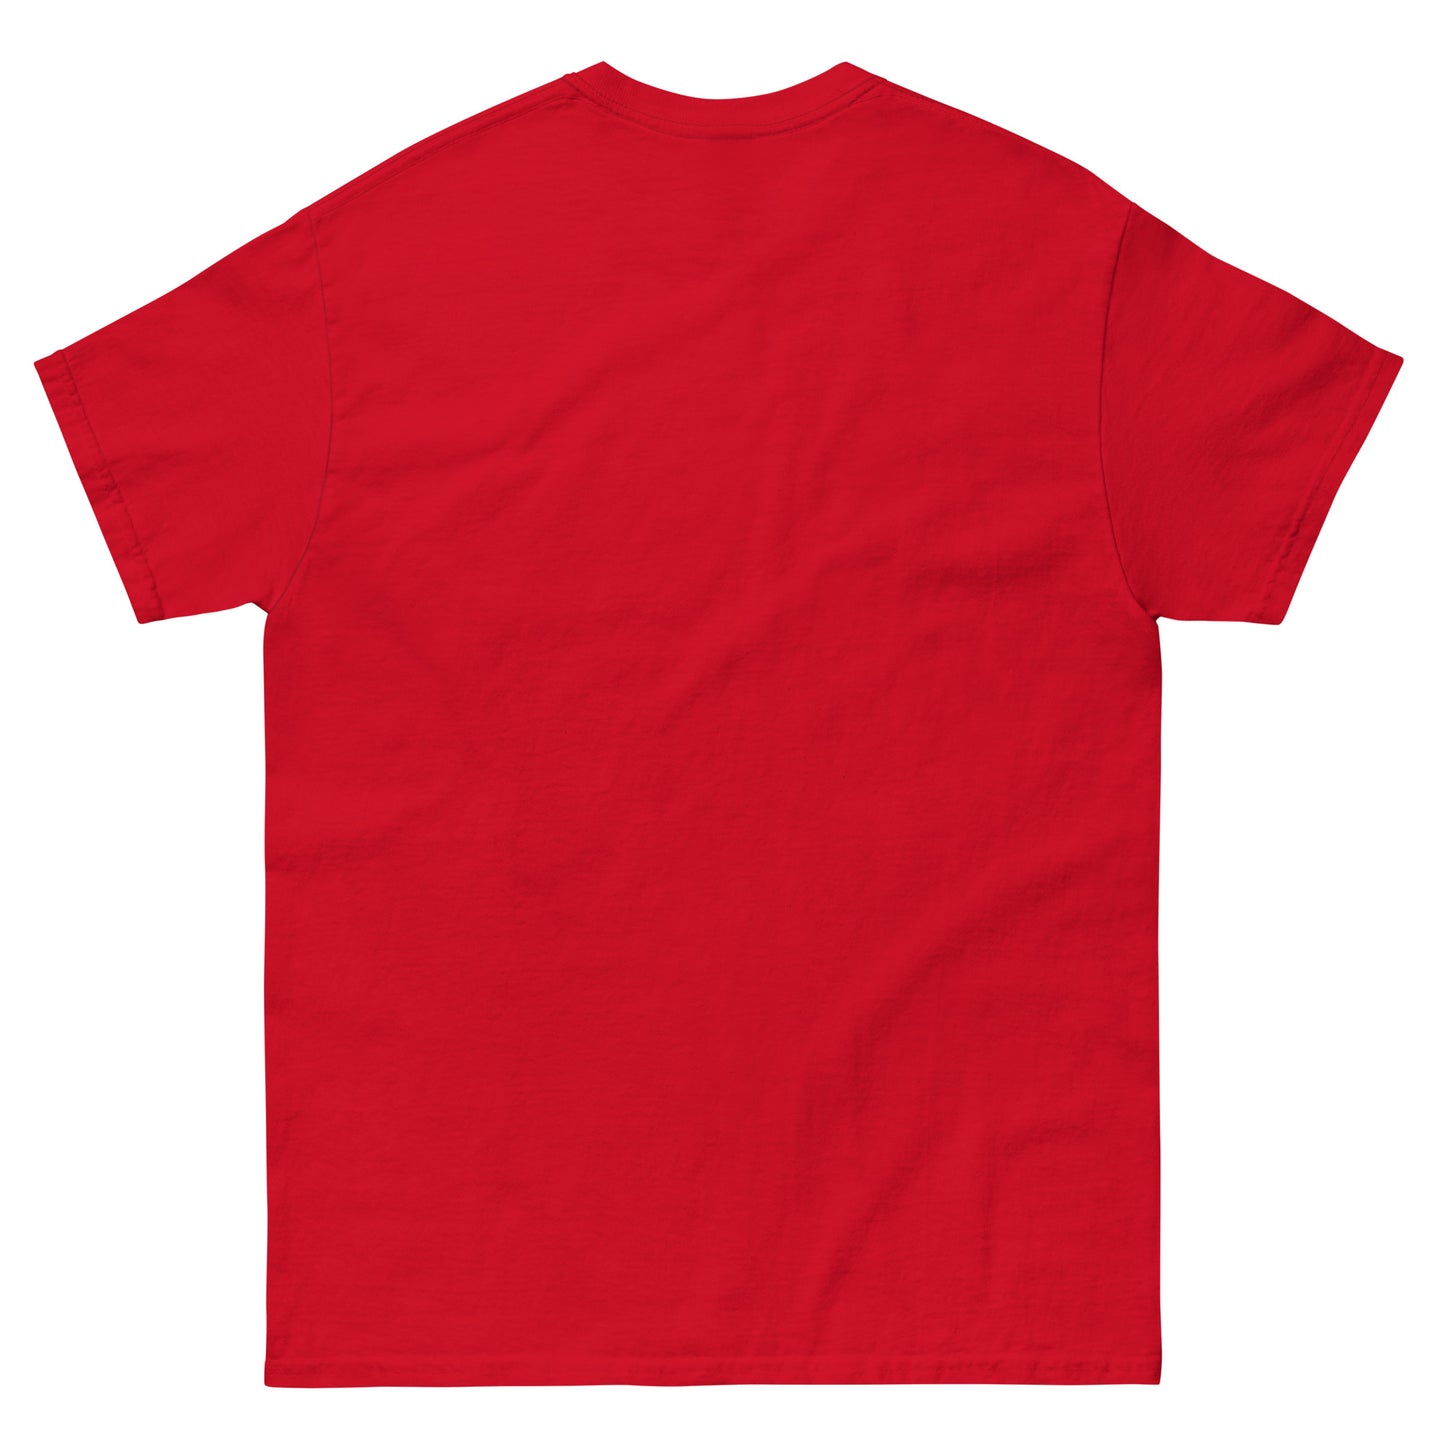 Catzilla T-Shirt